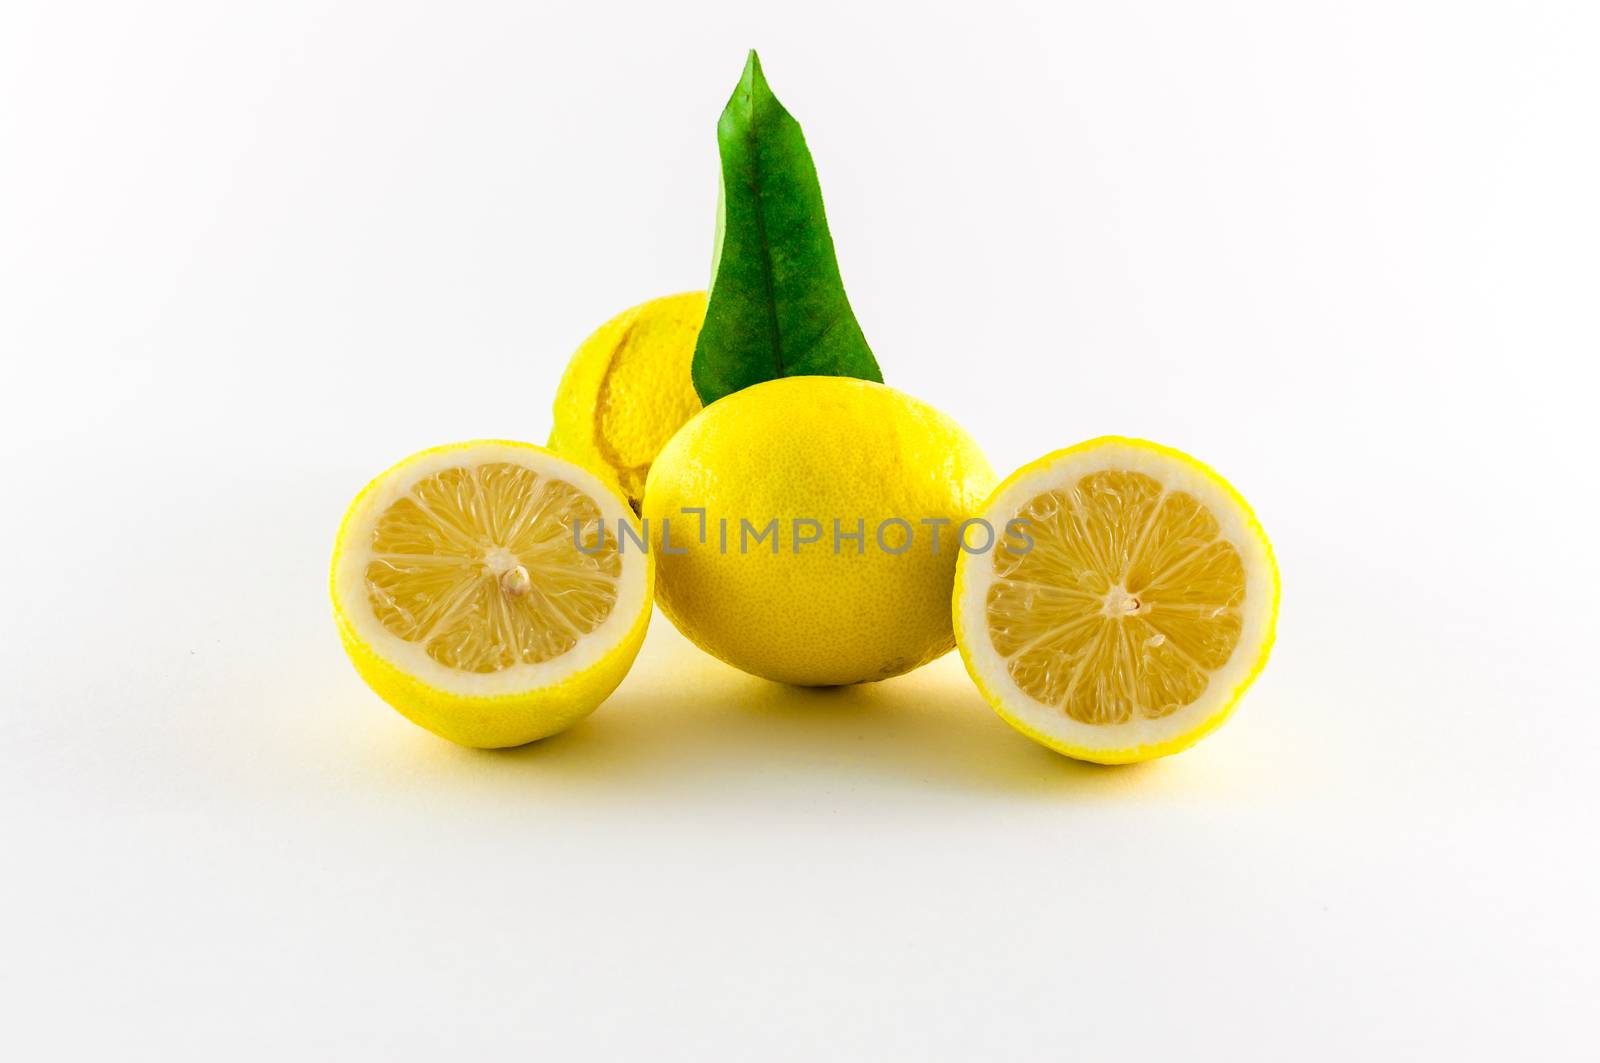 Fresh lemons yellow and green on white background